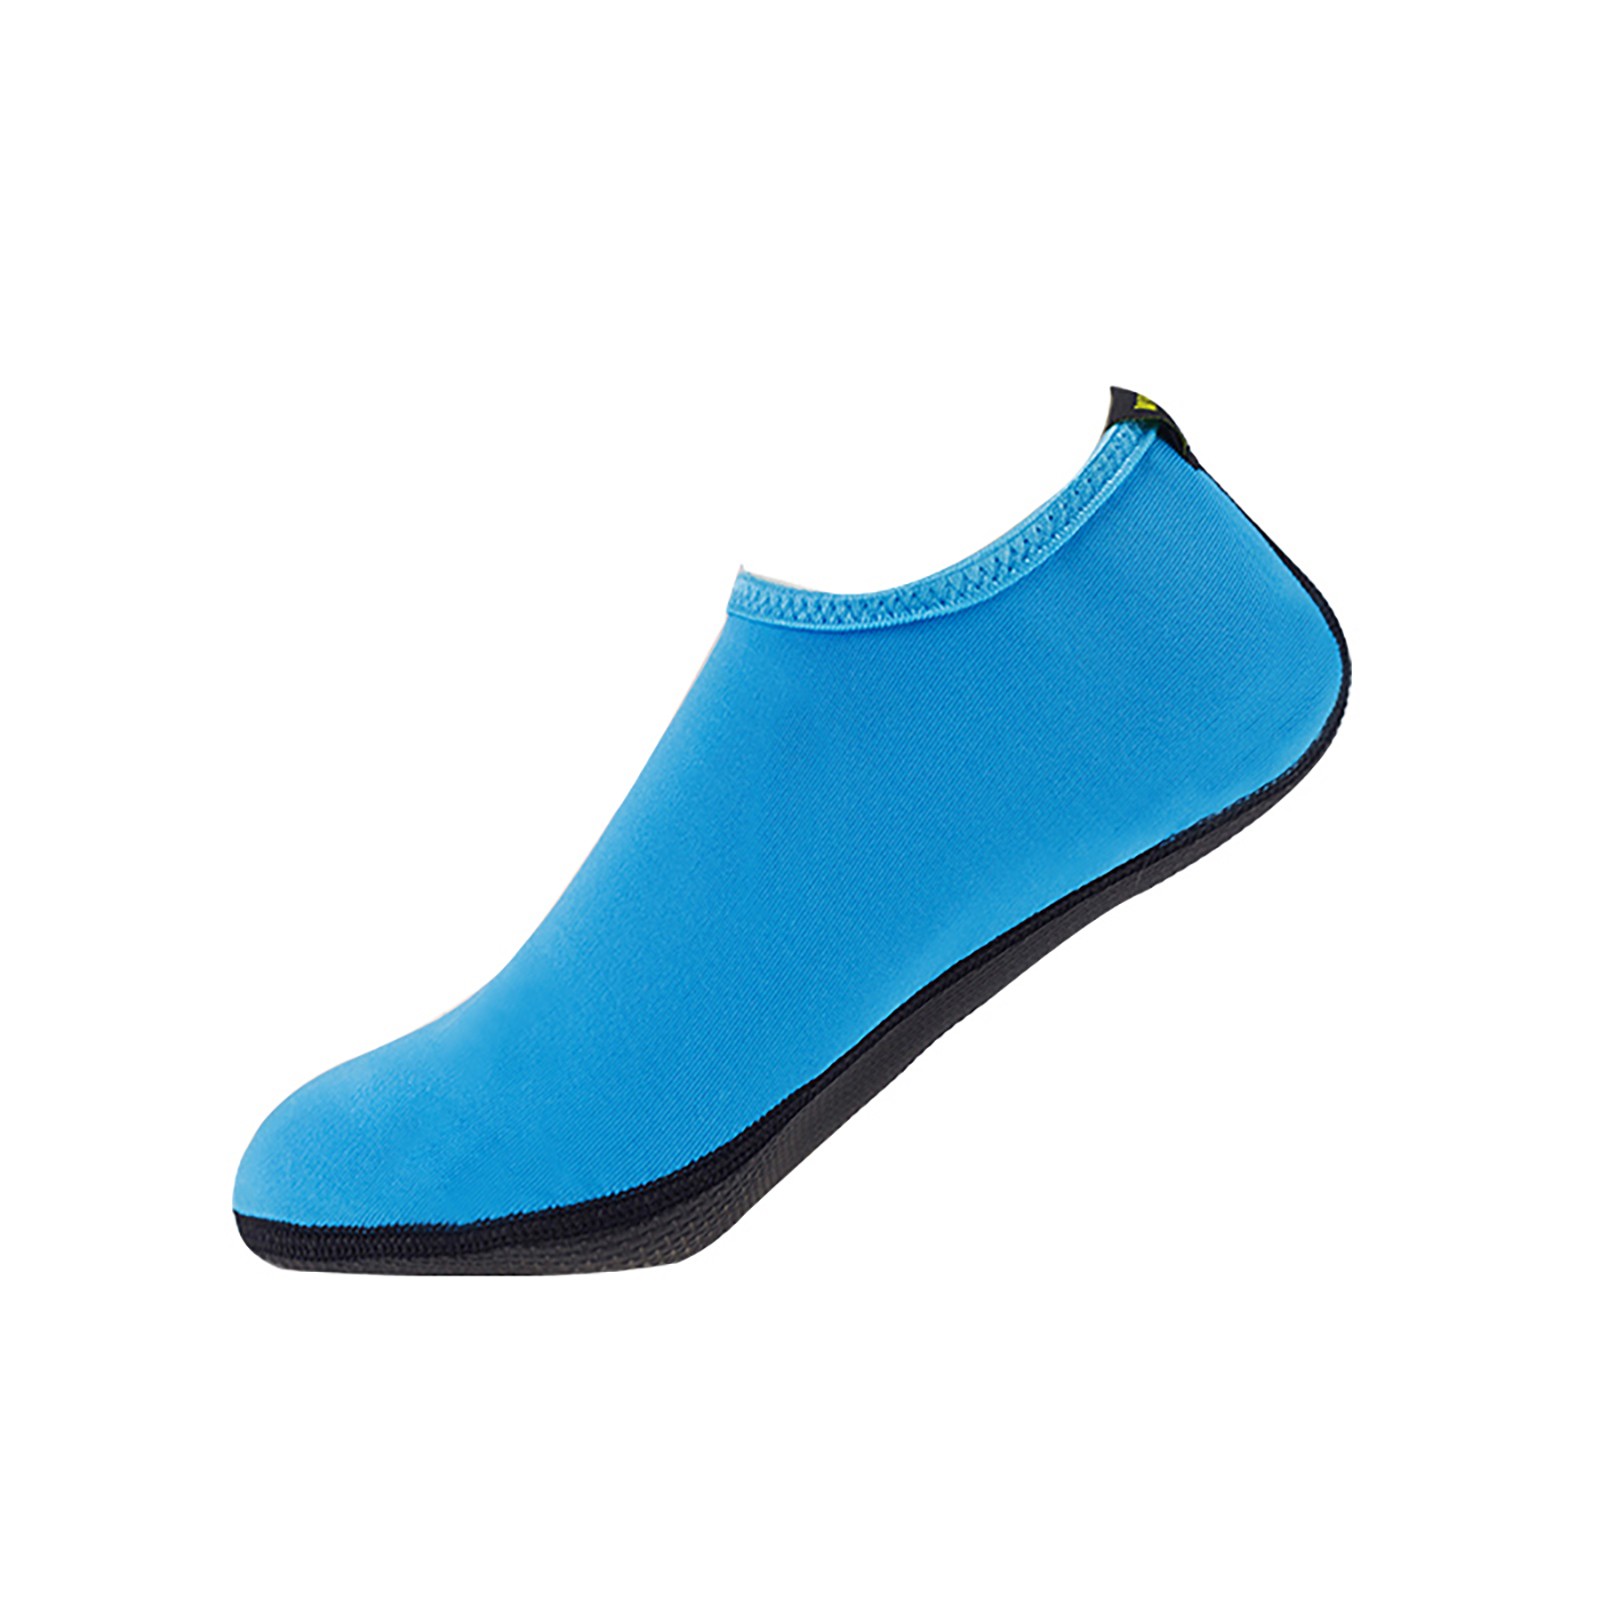 Ichuanyi Men's and Women's Water socks Barefoot Speed Dry Anti-skid Water Socks Yoga - image 1 of 4